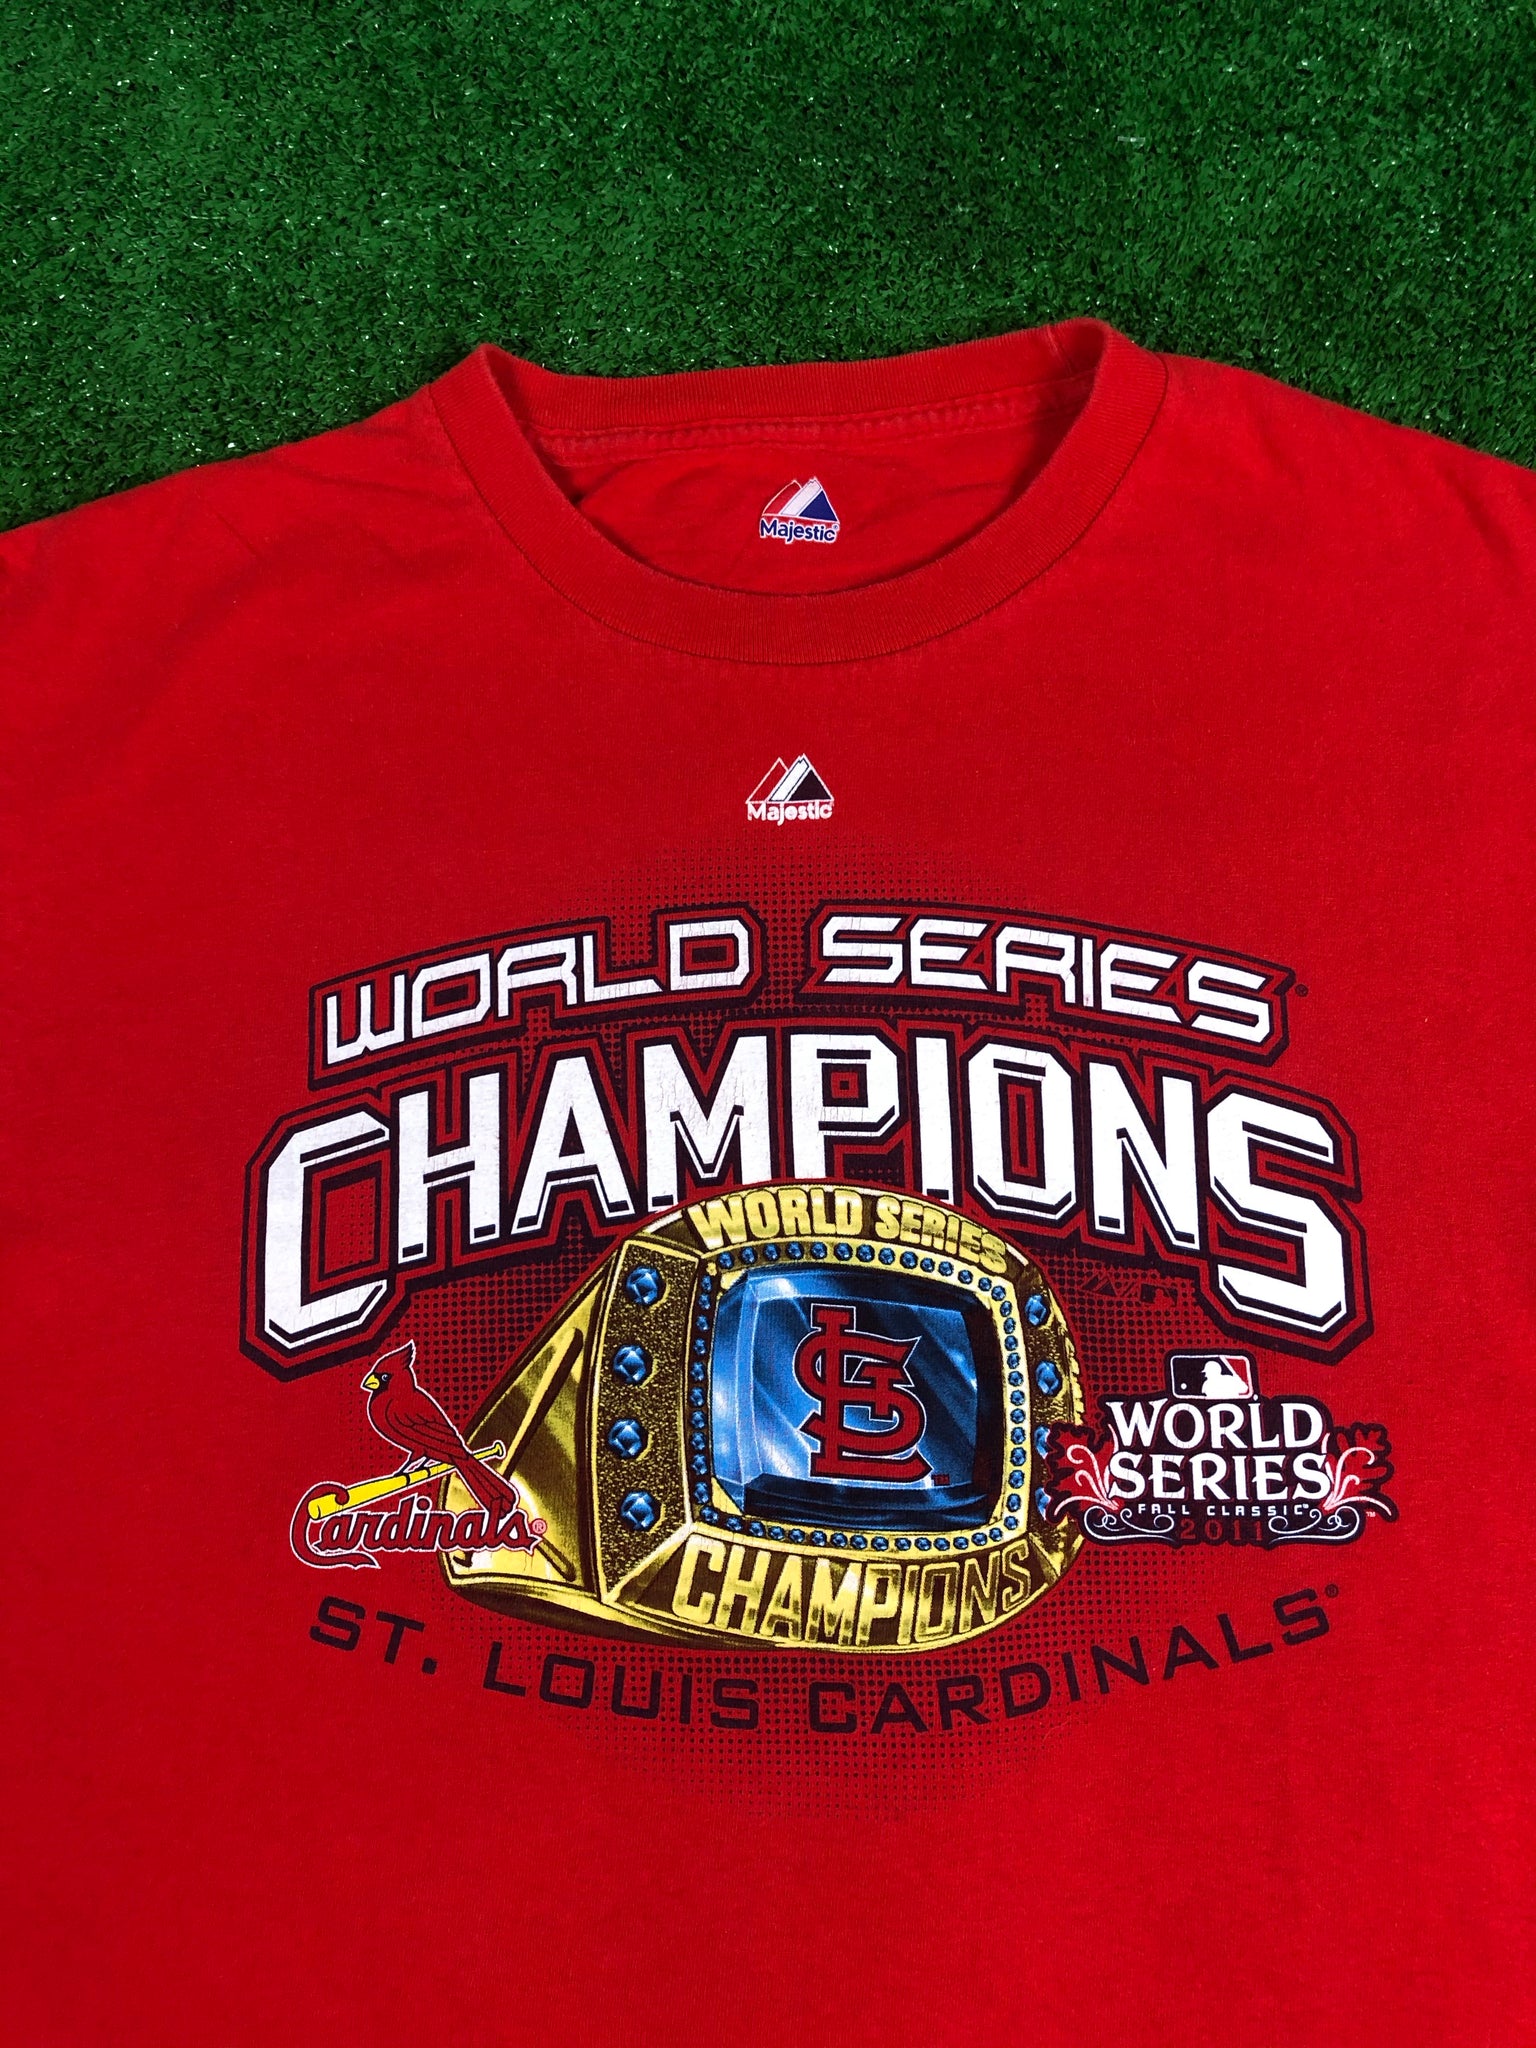 St. Louis Cardinals World Series Champions 2011